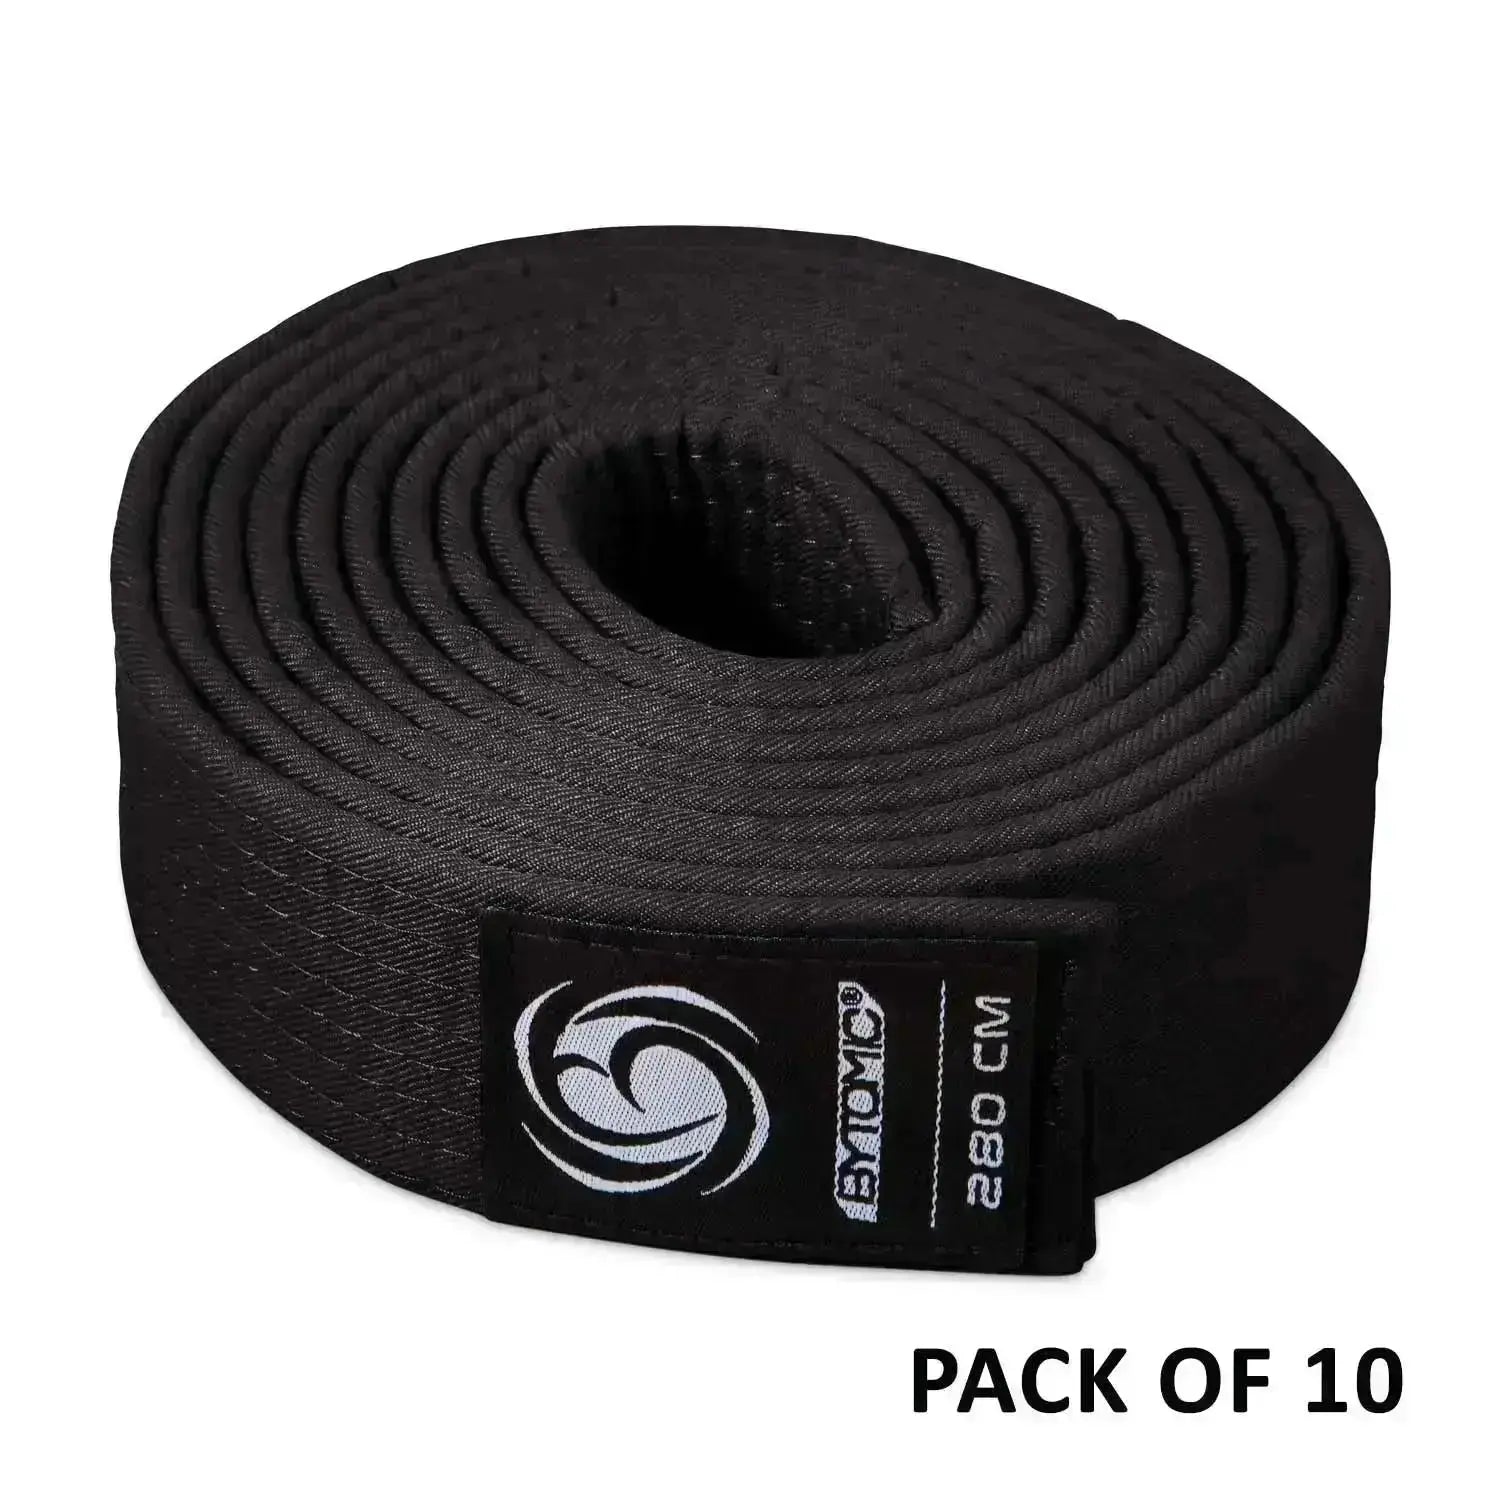 Bytomic Plain Polycotton Martial Arts Belt Pack of 10 Black-280cm Fight Co